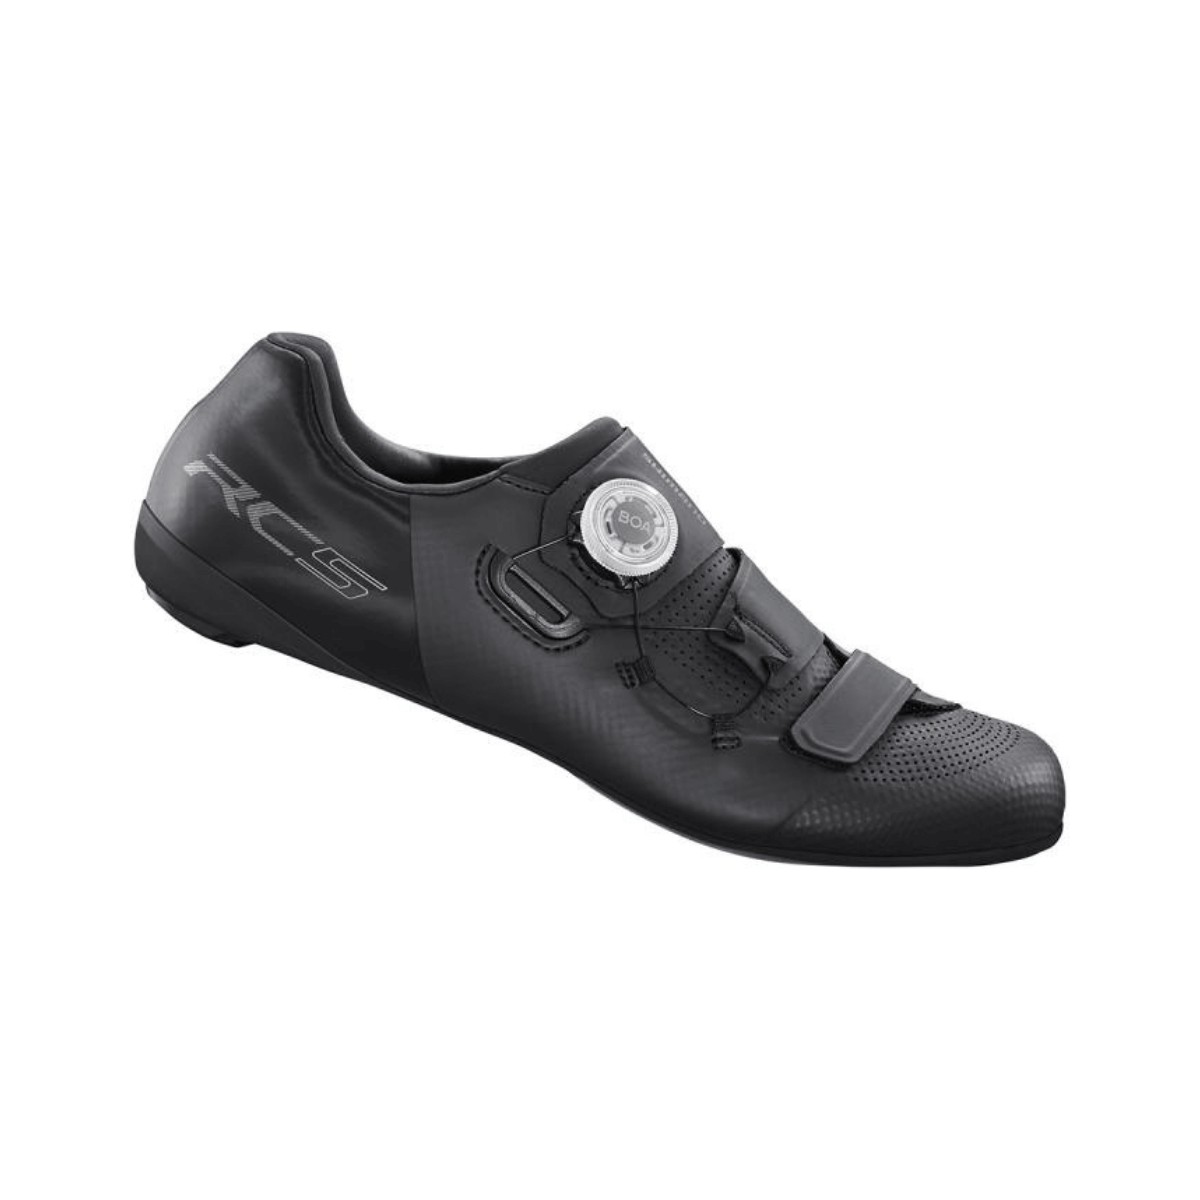 Zapatillas Shimano RC502 Negro, Talla 45 - EUR